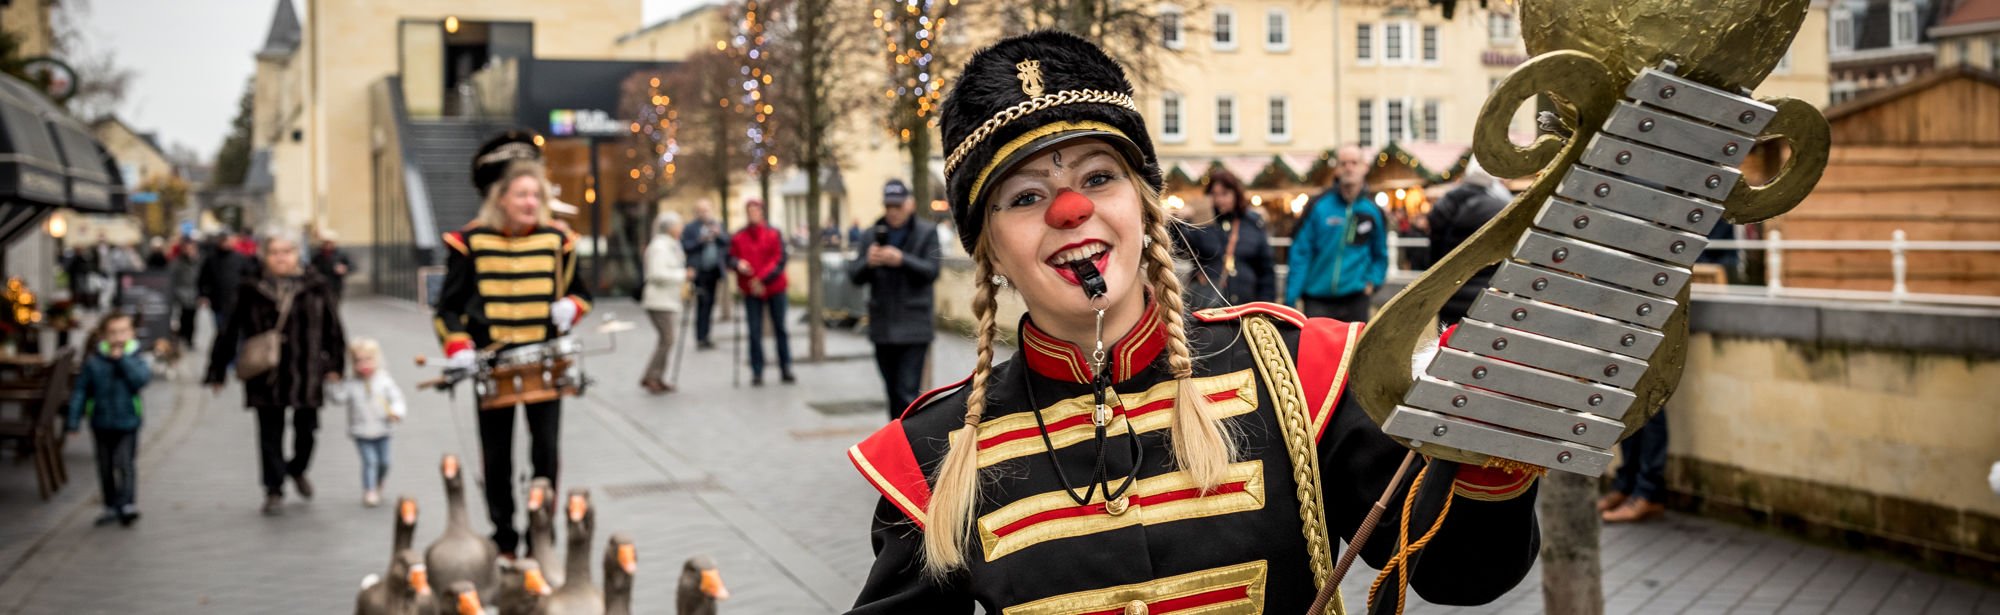 Kerststad Valkenburg ganzenparade meisje